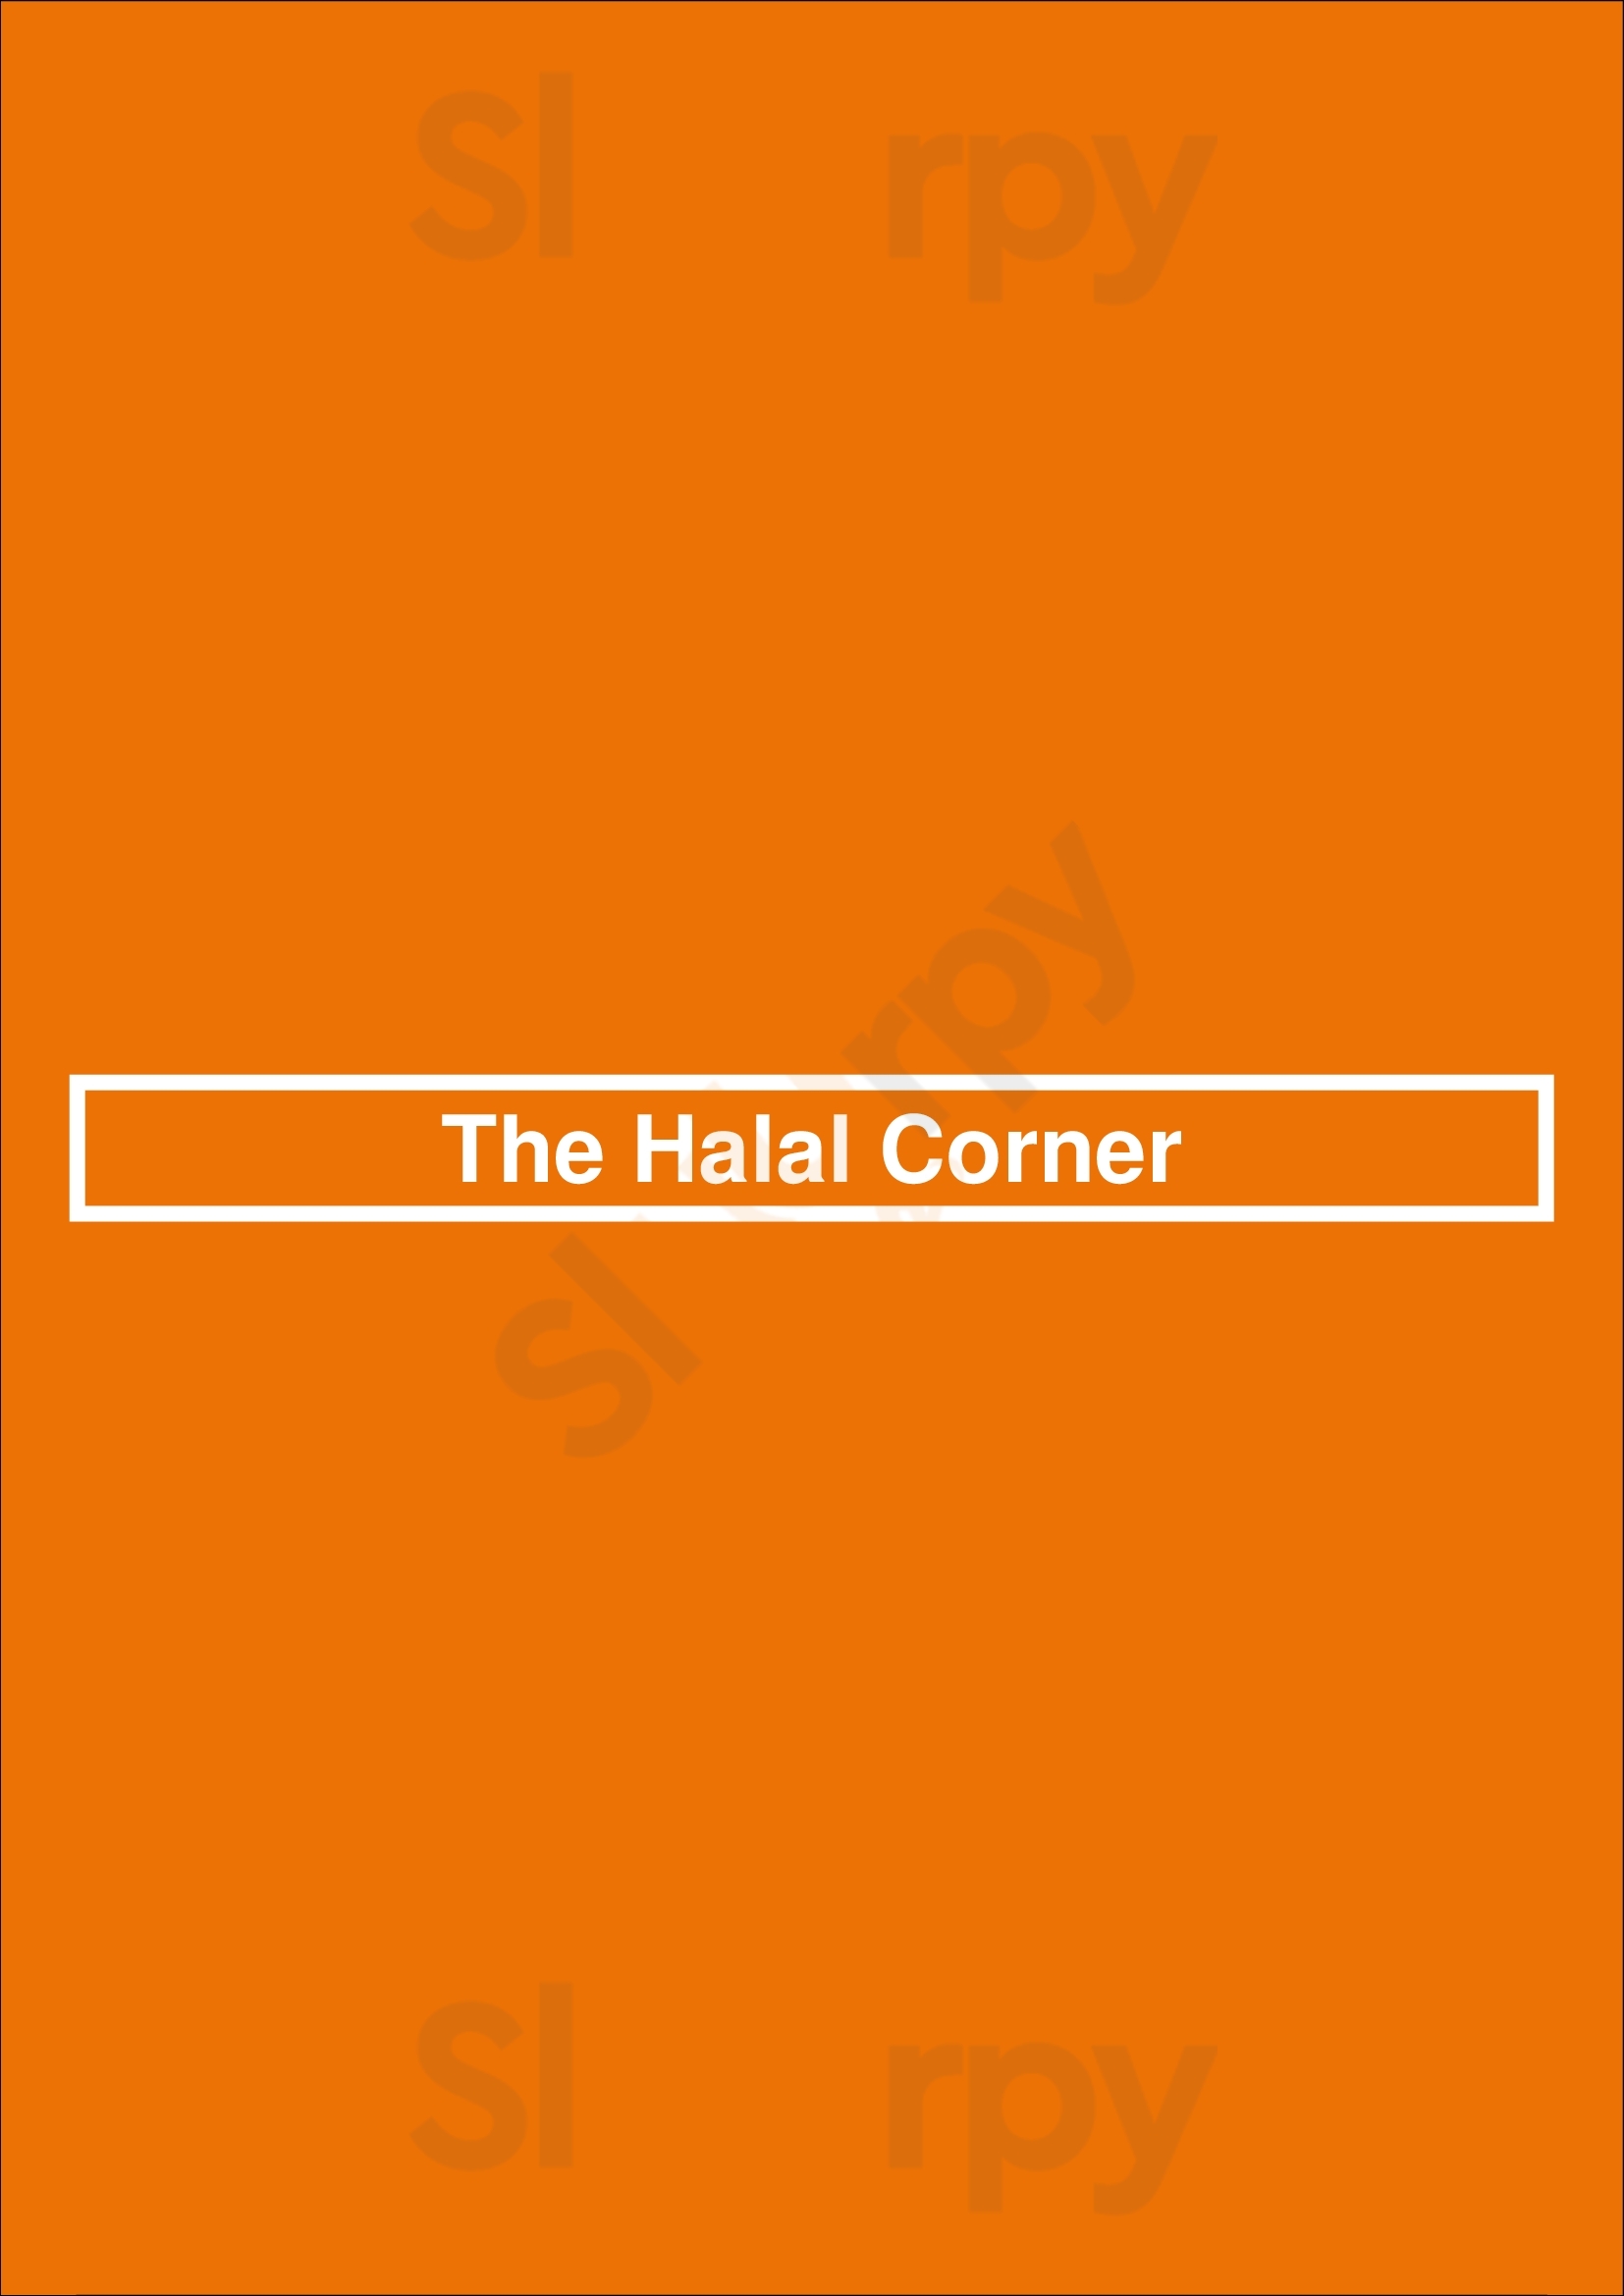 The Halal Corner Austin Menu - 1